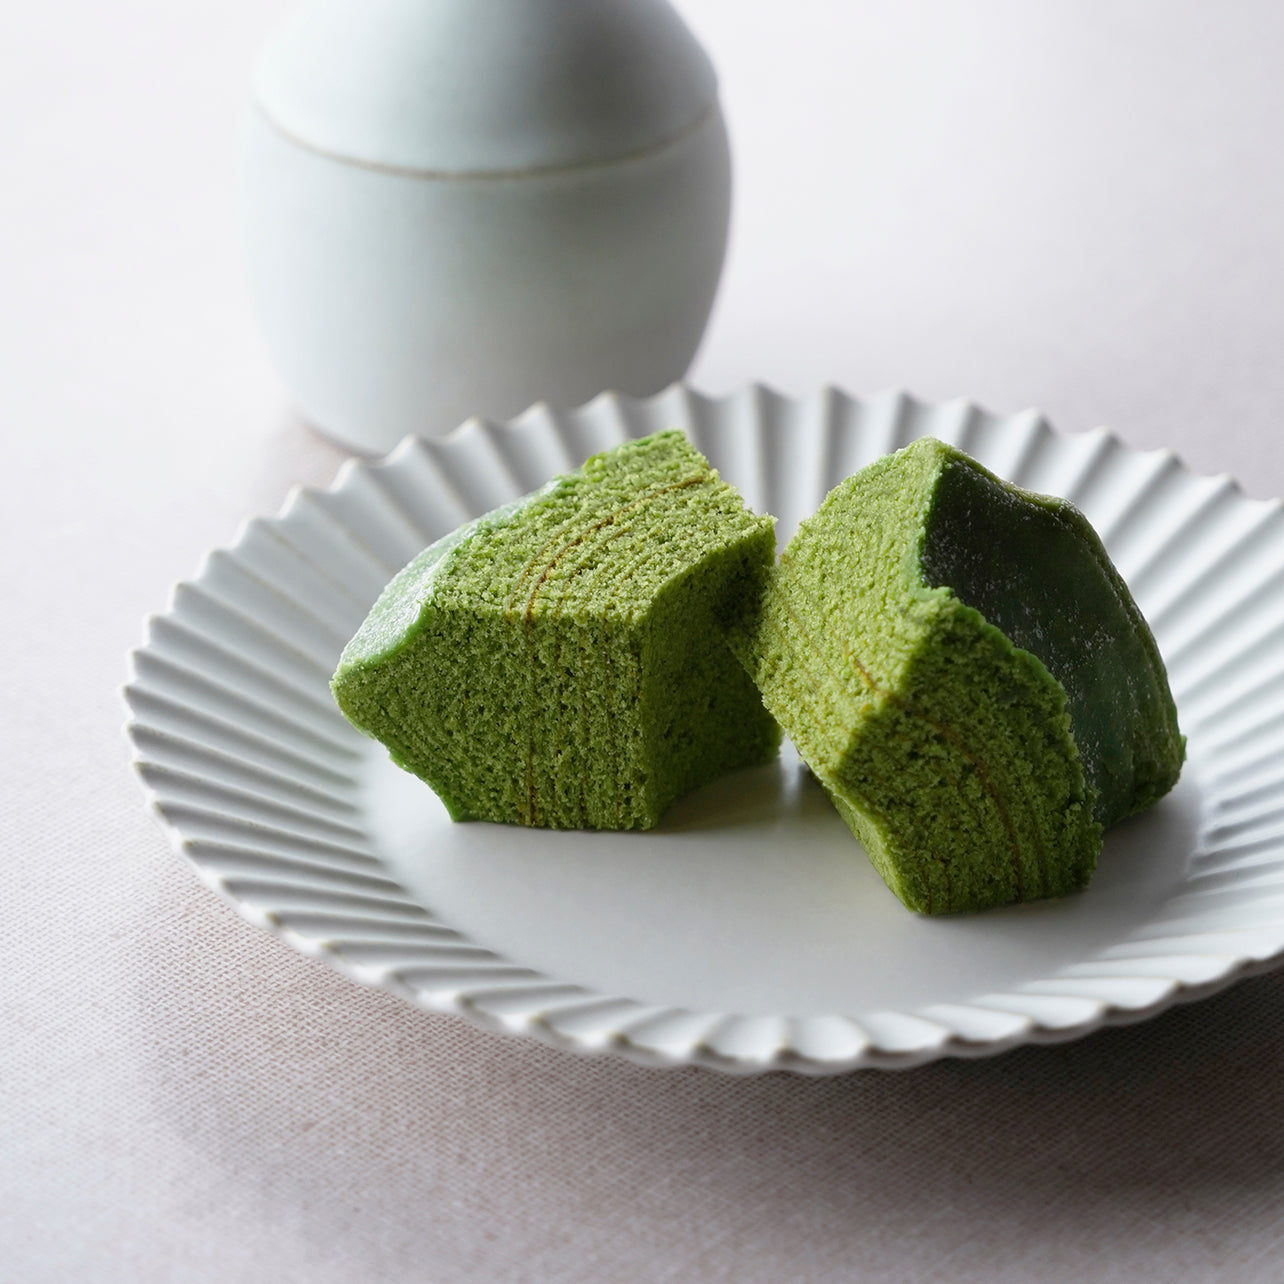 Assortment of Green Tea Maruto Baum [Matcha]